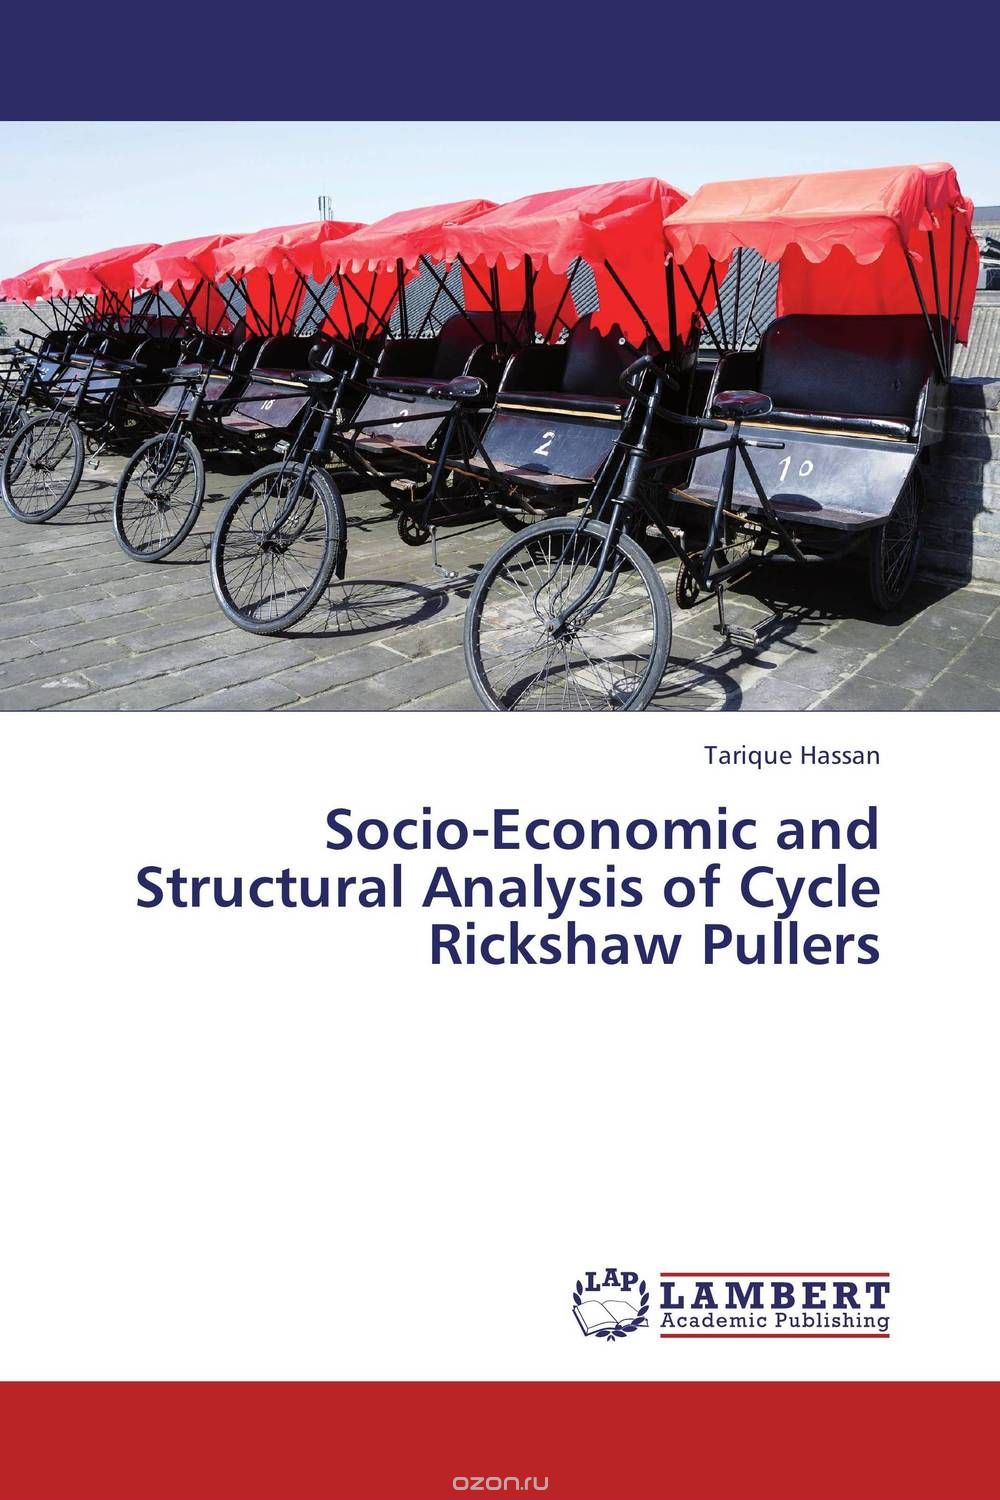 Скачать книгу "Socio-Economic and Structural Analysis of Cycle Rickshaw Pullers"